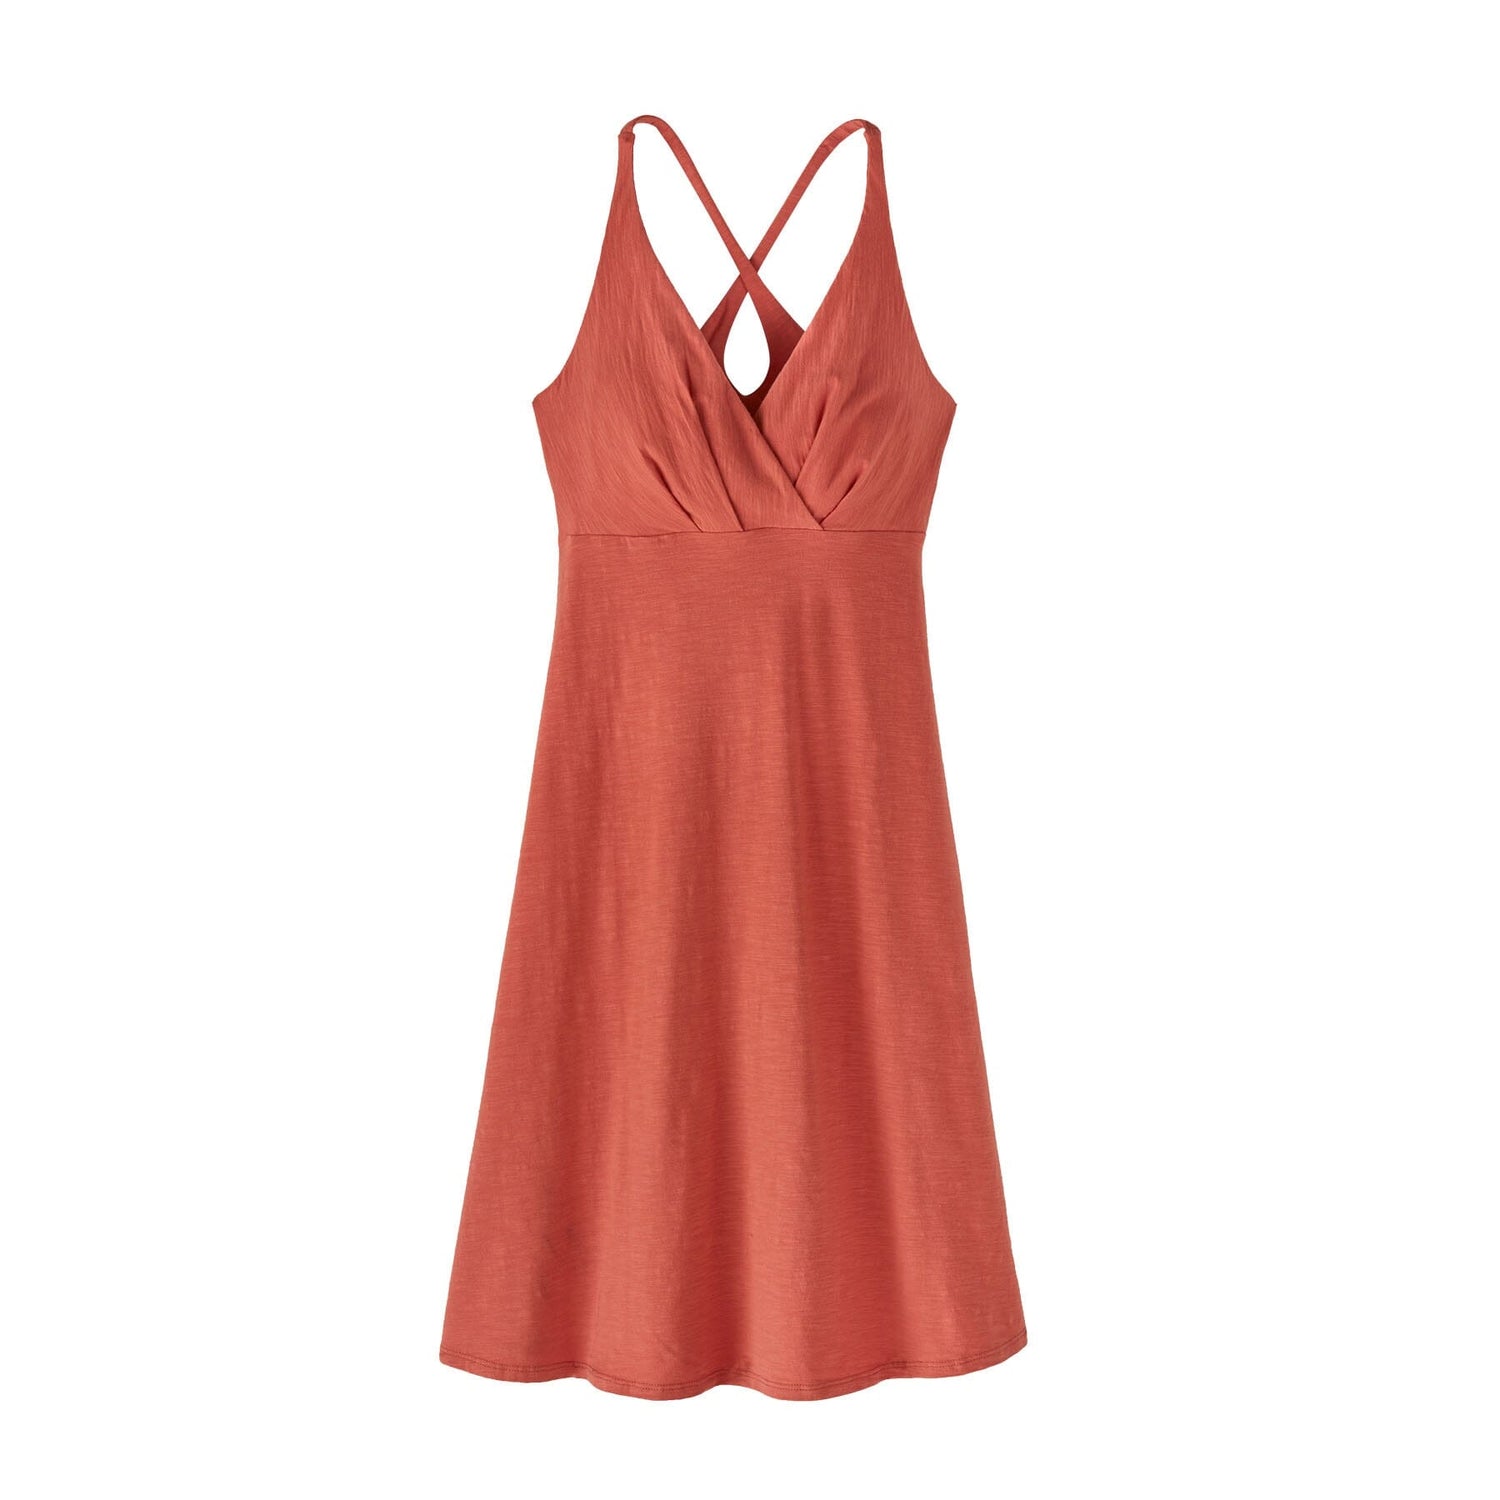 Patagonia Amber Dawn Dress - Organic Cotton Quartz Coral Dress